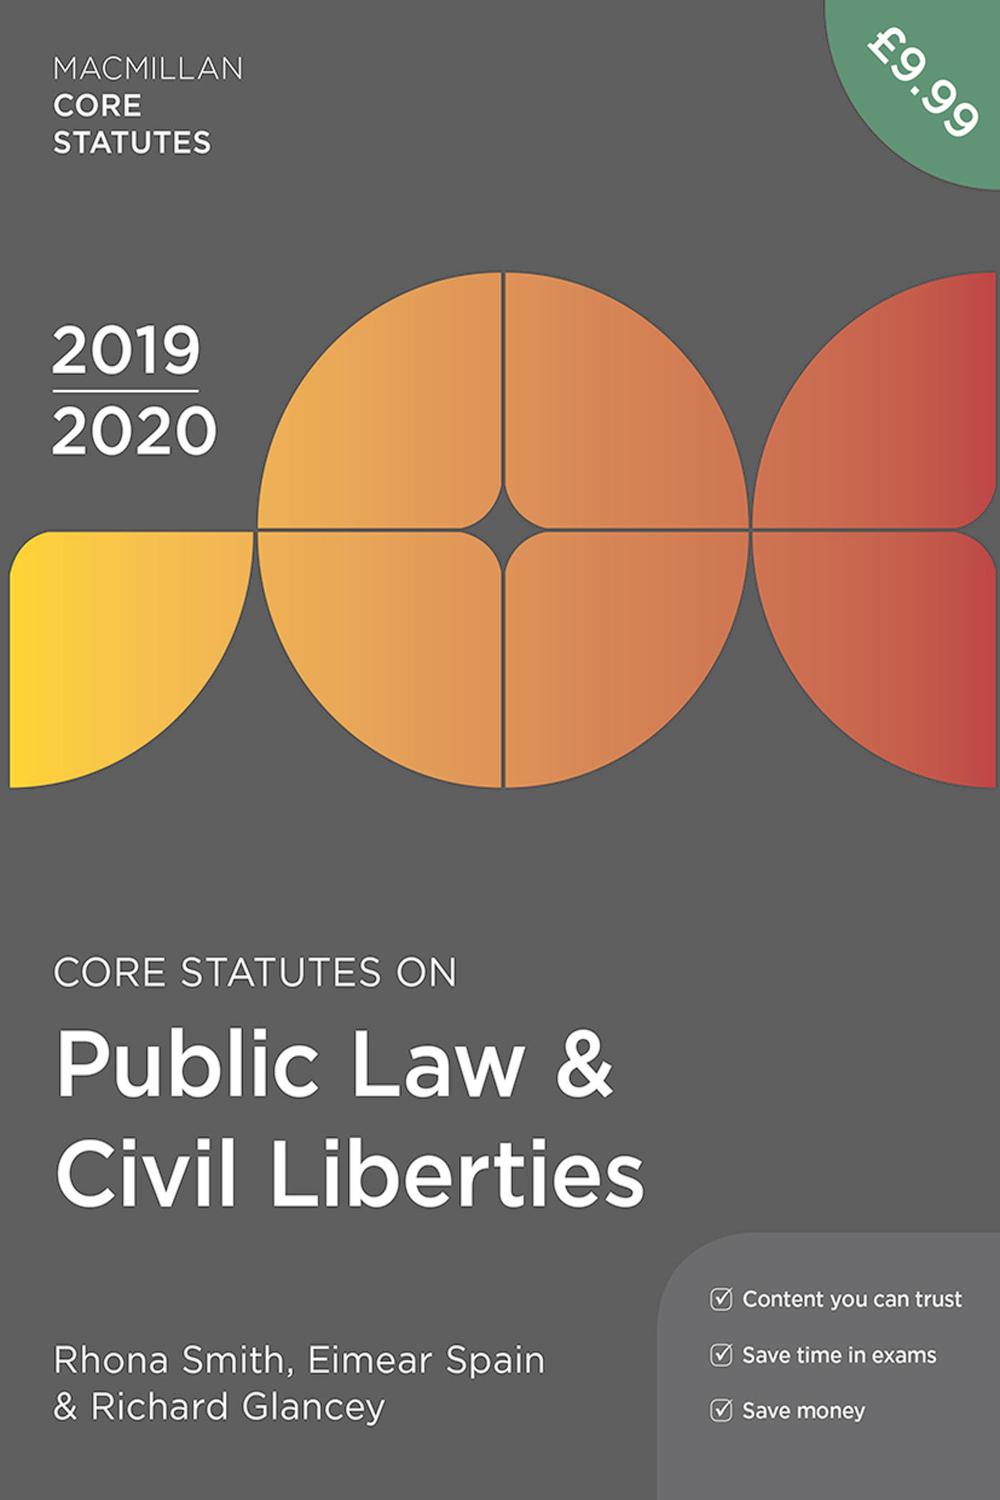 Core Statutes on Public Law & Civil Liberties 2019-20 - Rhona Smith, Eimear Spain, Richard Glancey